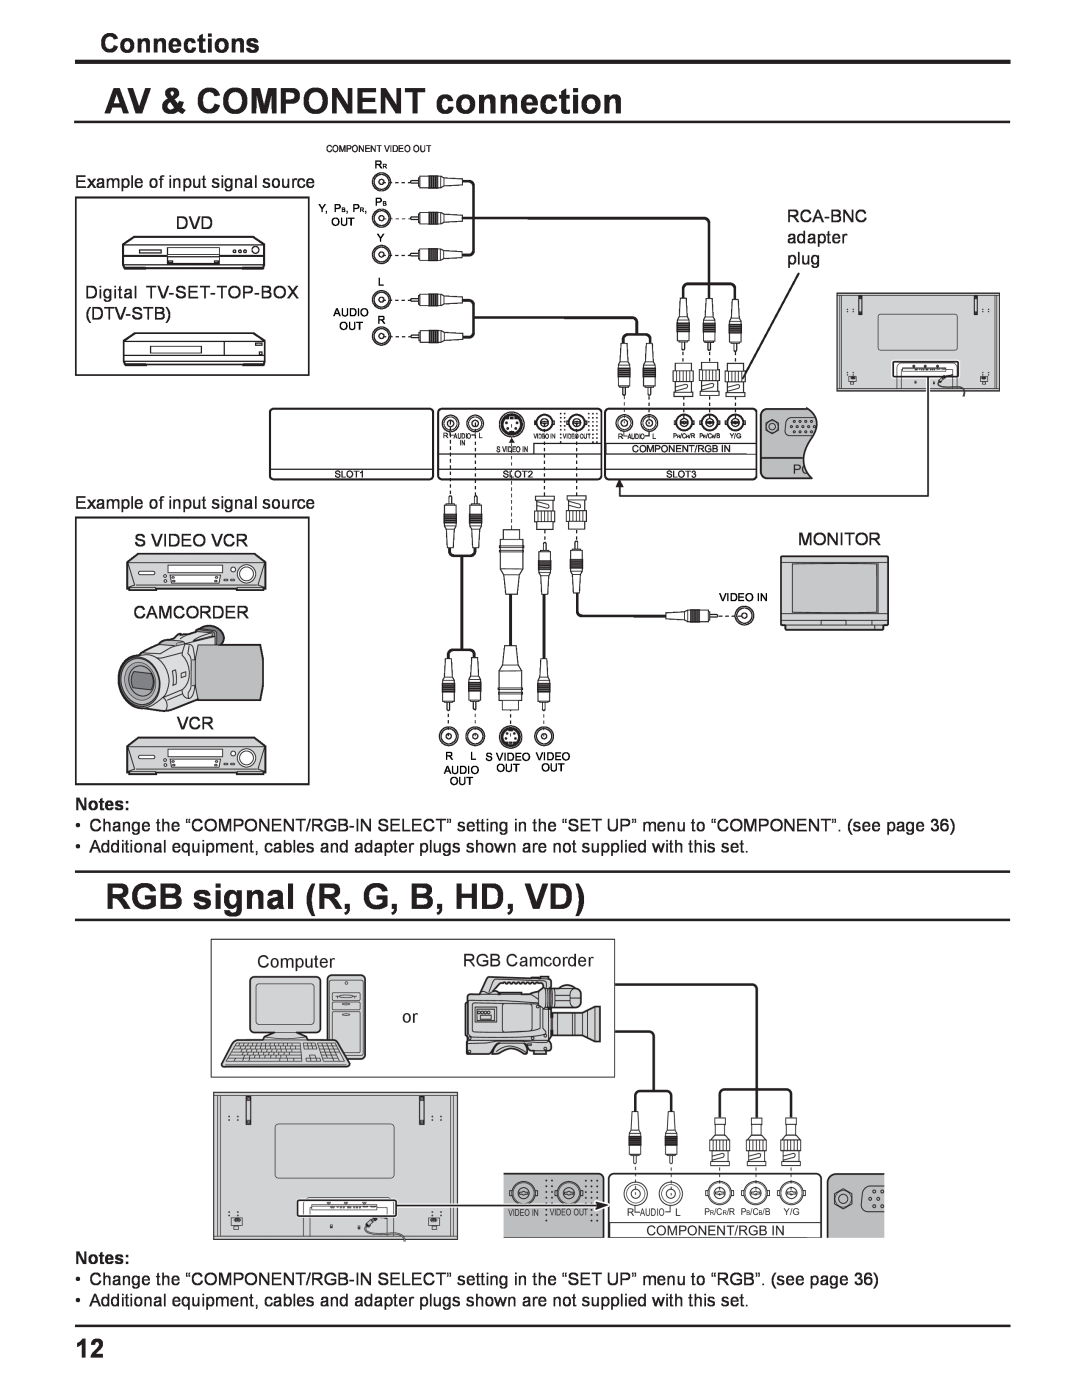 Panasonic TQBC2033 manual AV & COMPONENT connection, RGB signal R, G, B, HD, VD, Connections, Component/Rgb In 